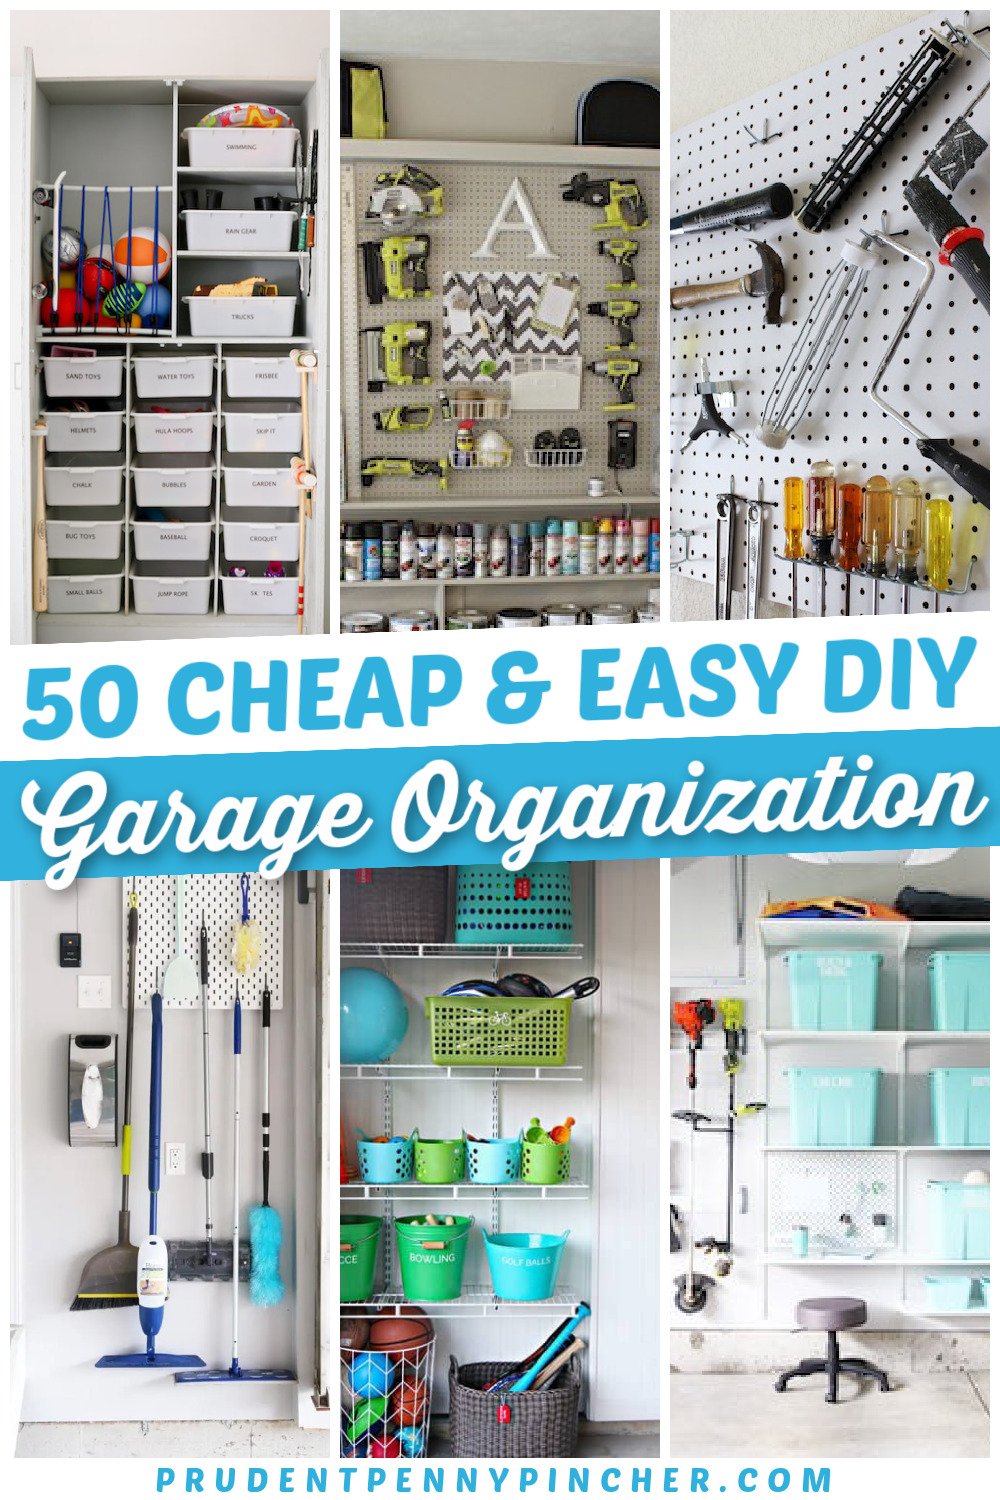 Easy Garage Organization Ideas, Shelving And Organization